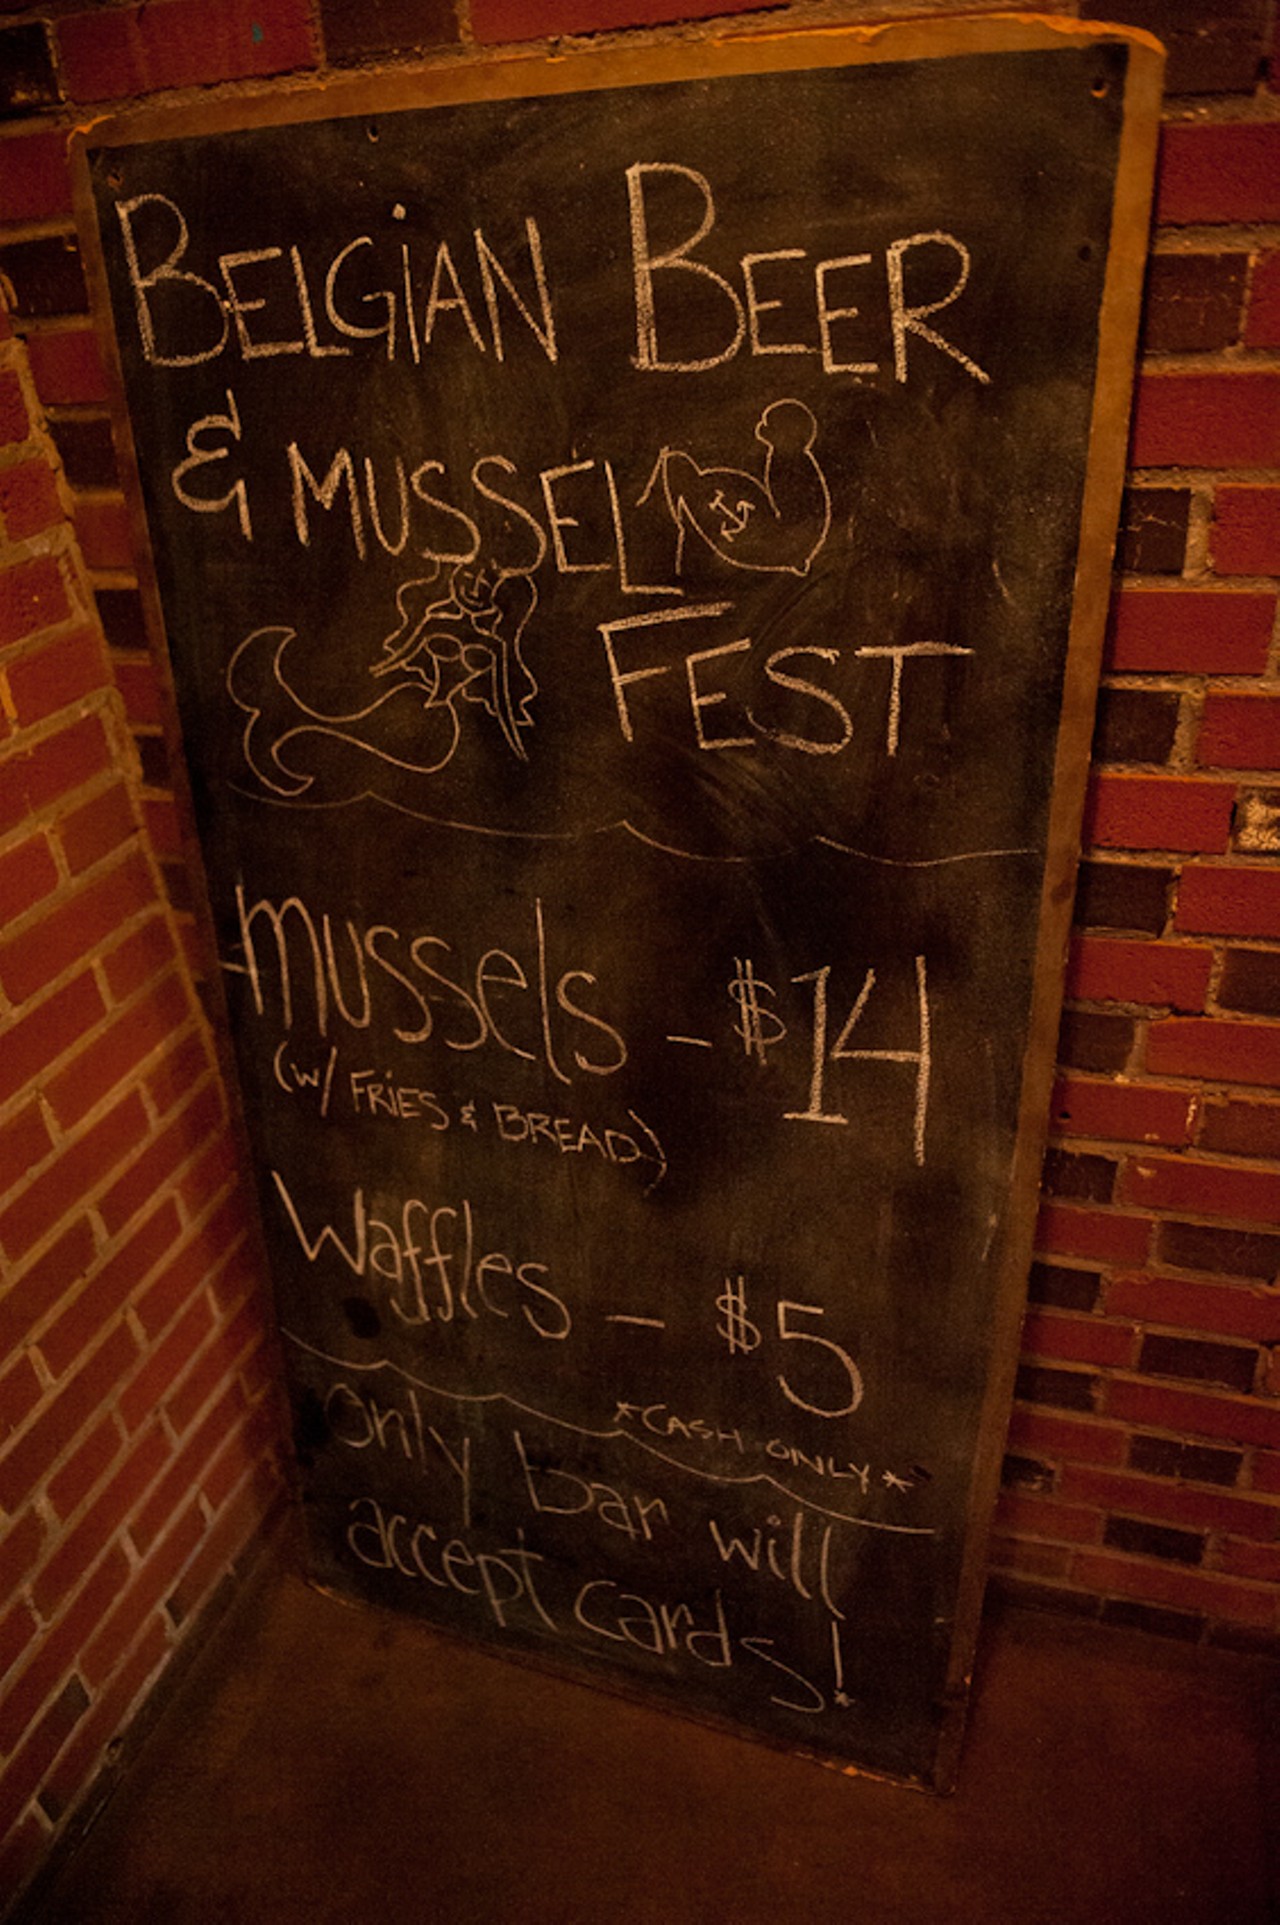 Belgian Beer & Mussel Festival at Schlafly Tap Room